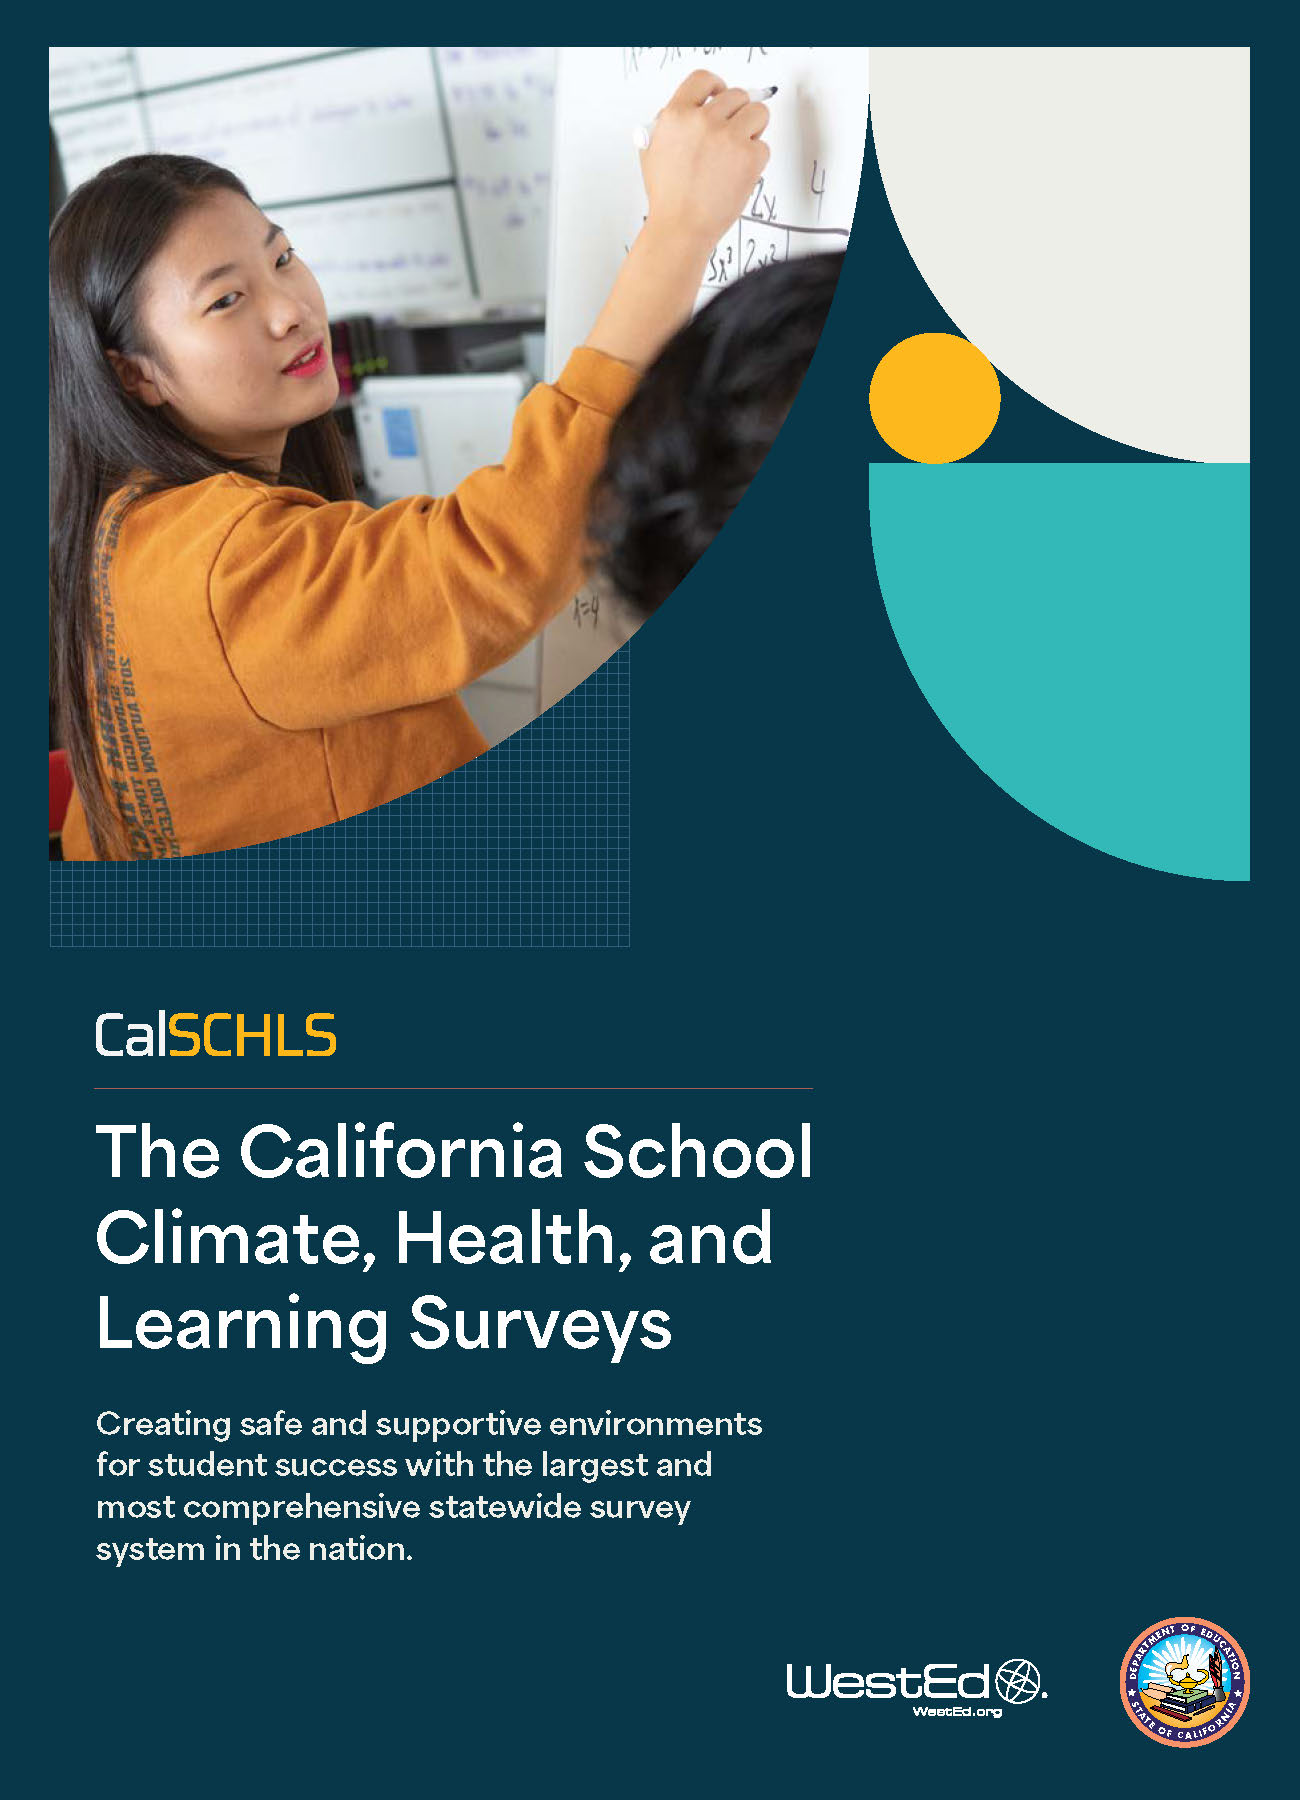  The California School Climate, Health, and Learning Surveys Brochure